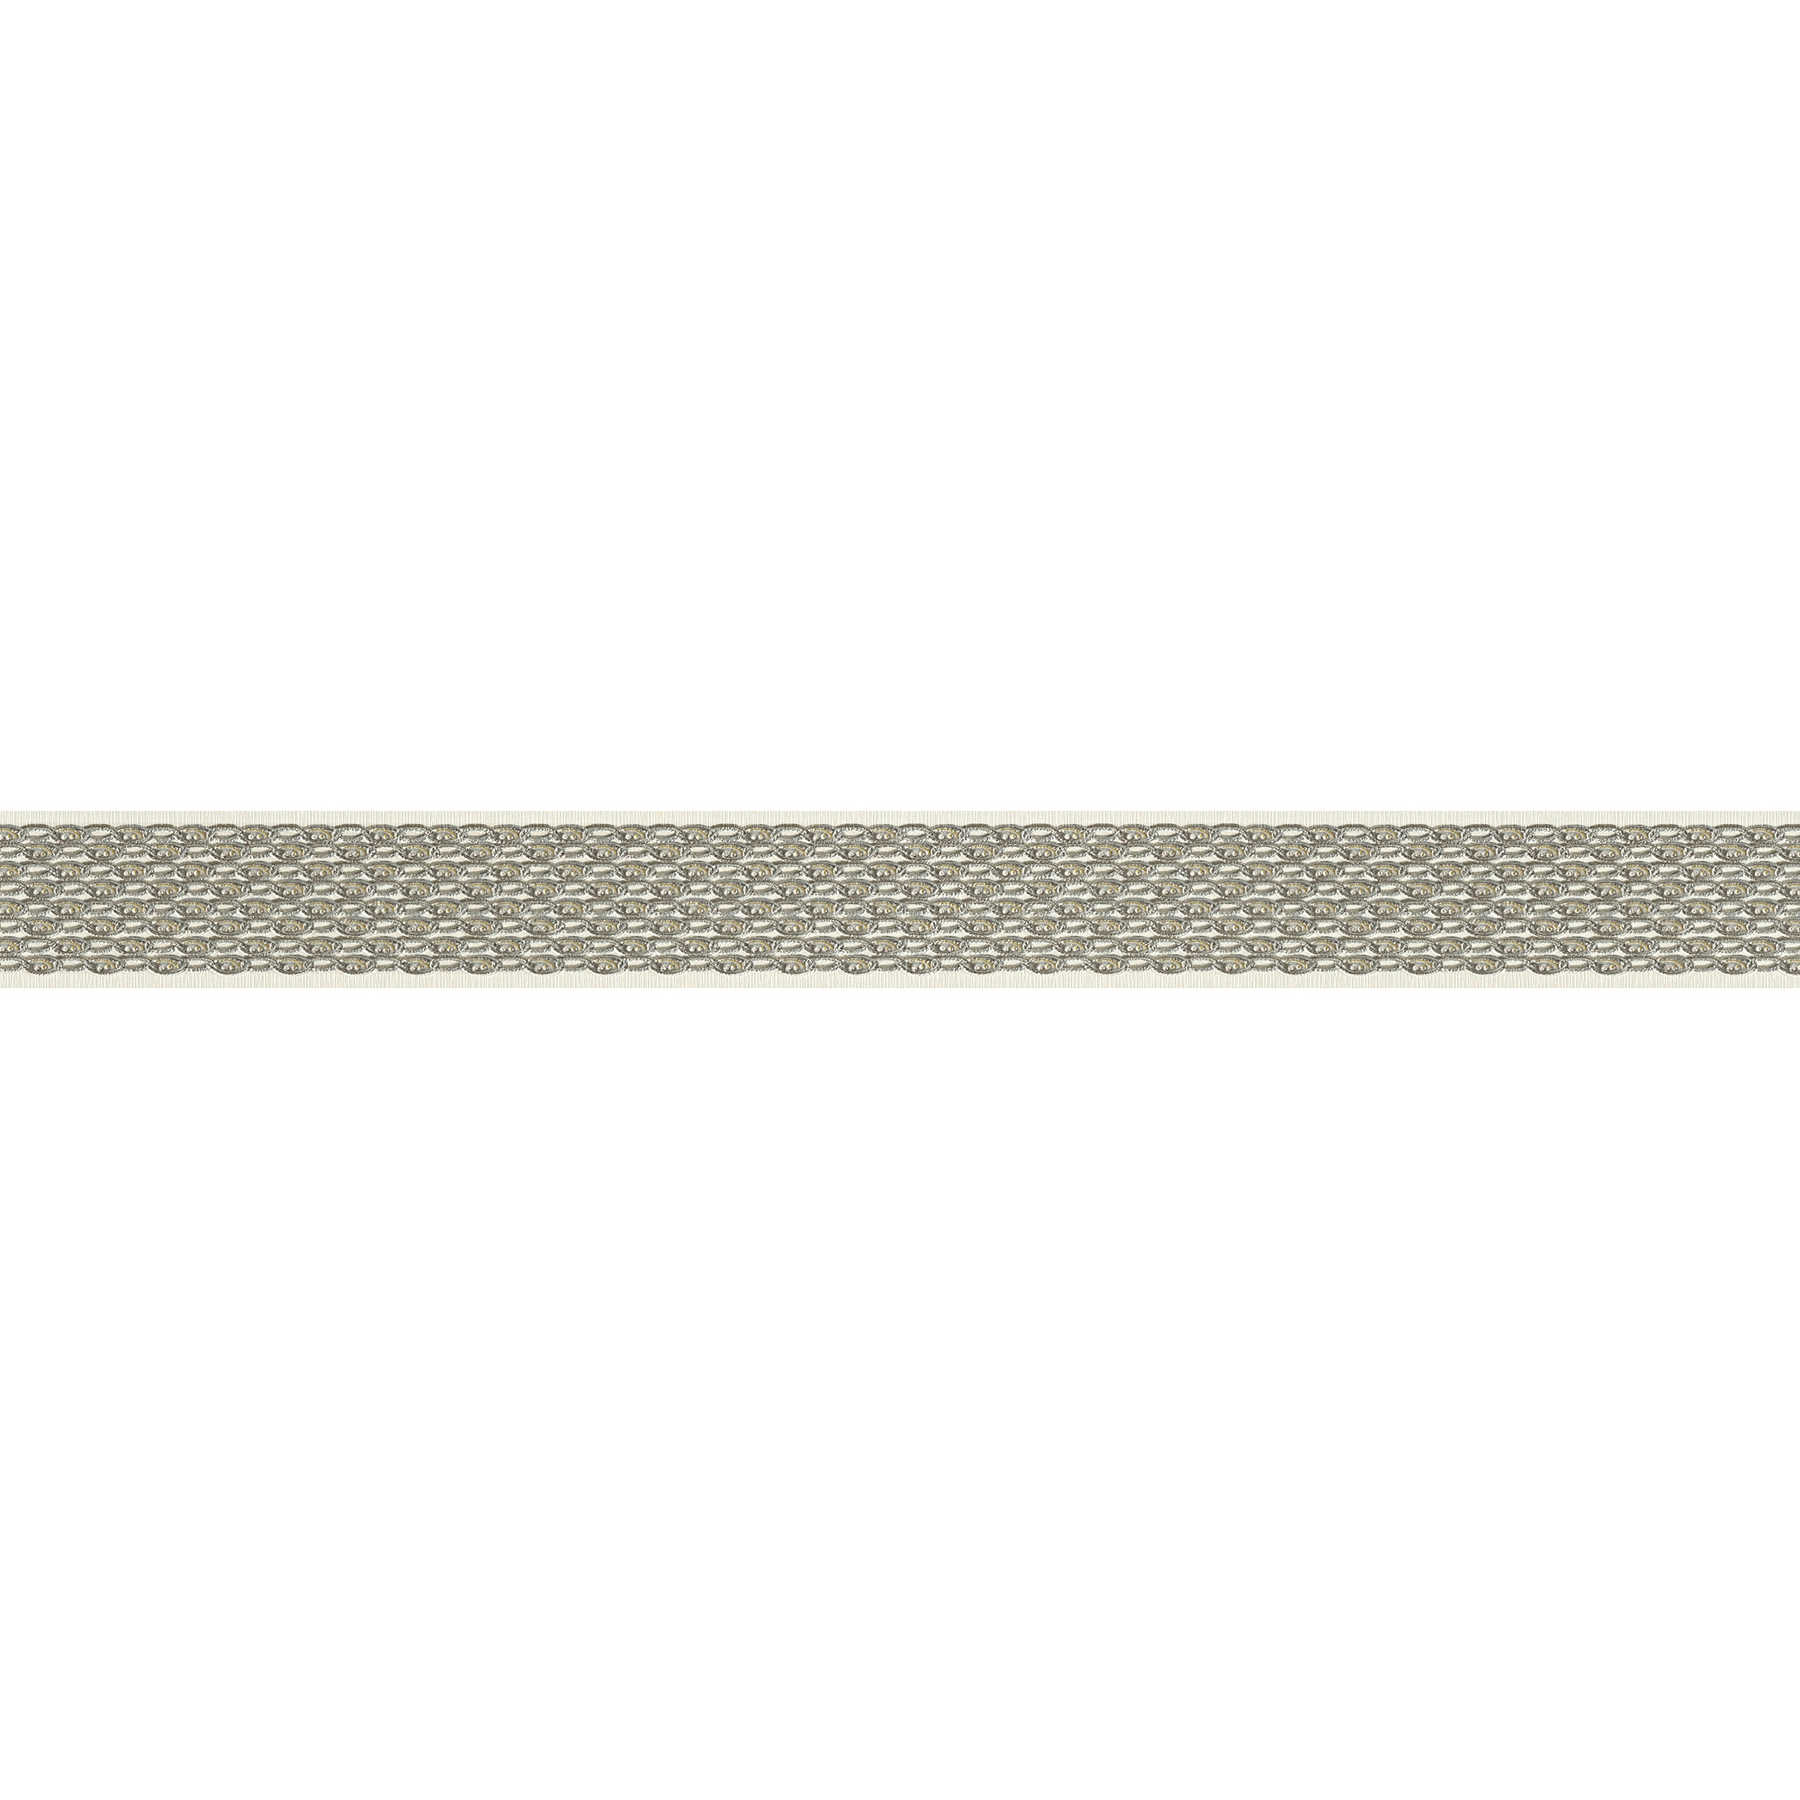 Self-adhesive wallpaper border with meander - metallic
